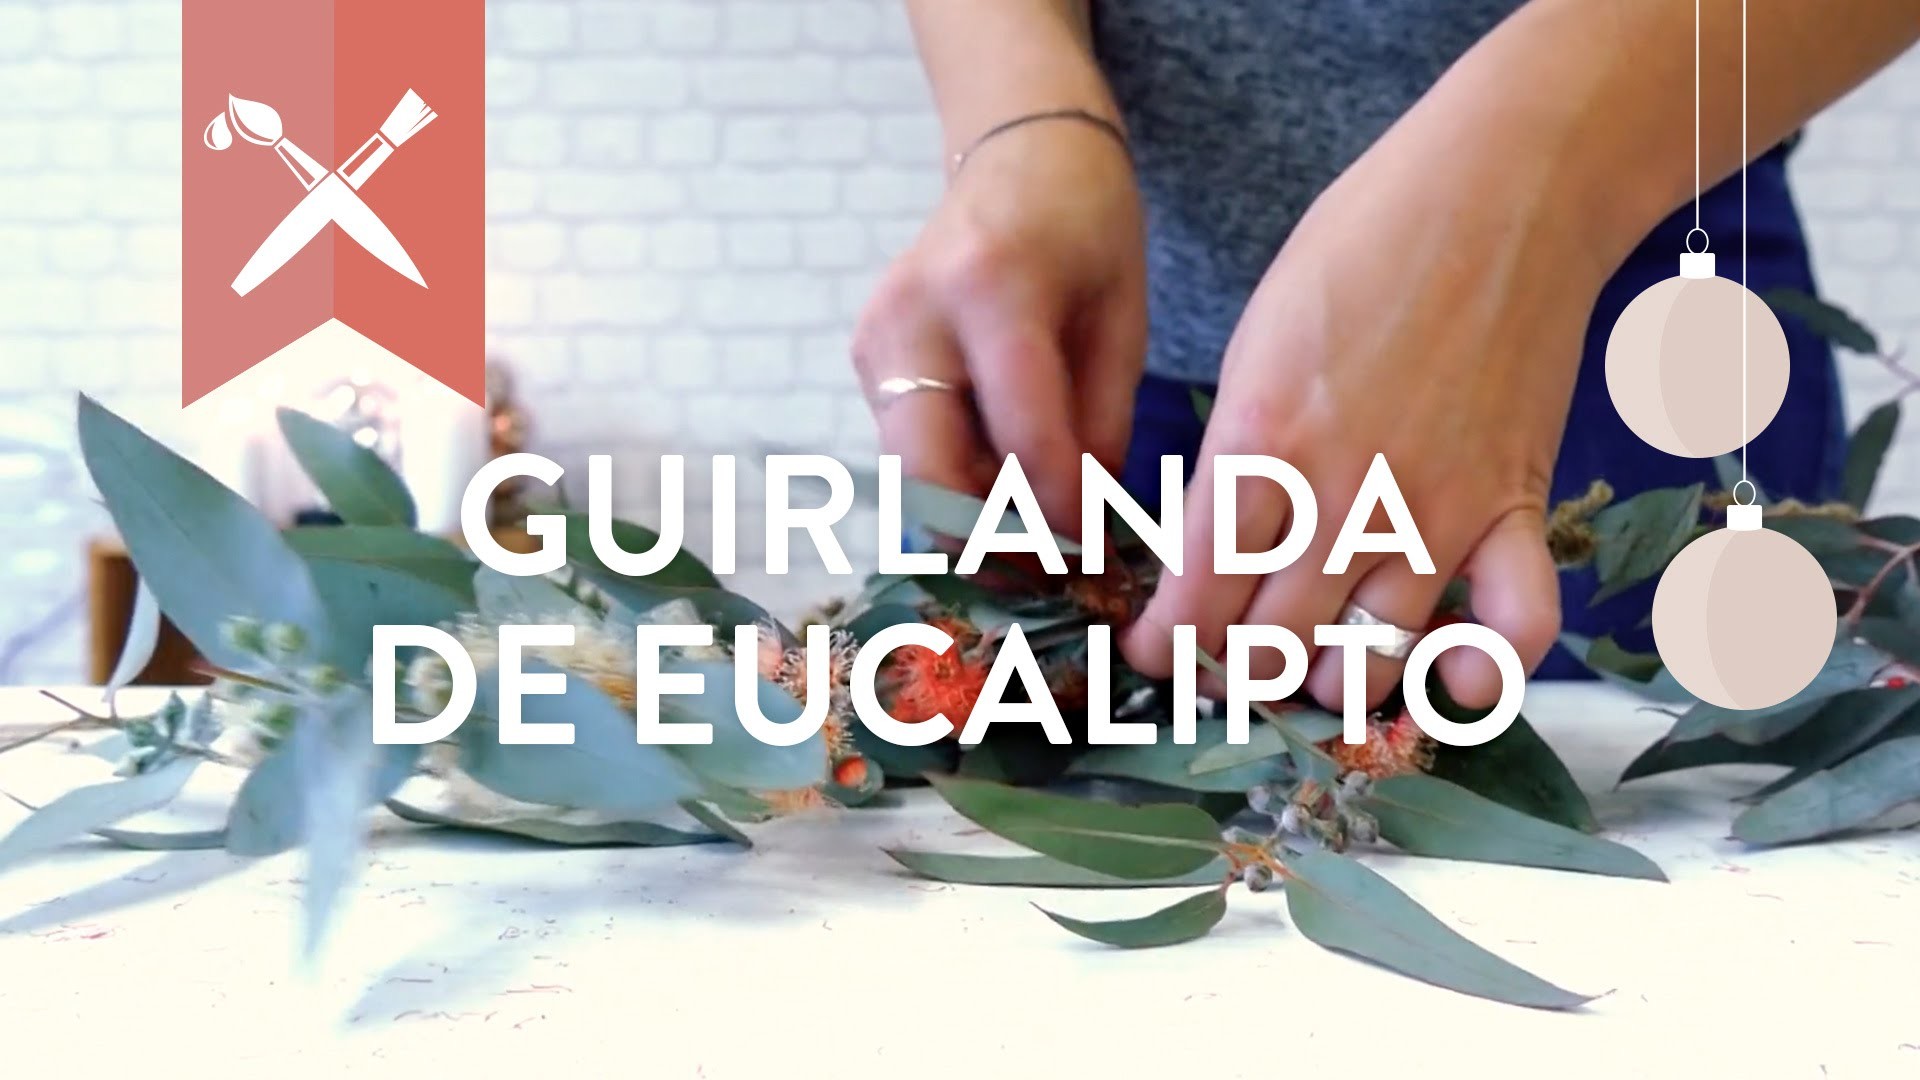 DIY de Natal - Guirlanda de Eucalipto